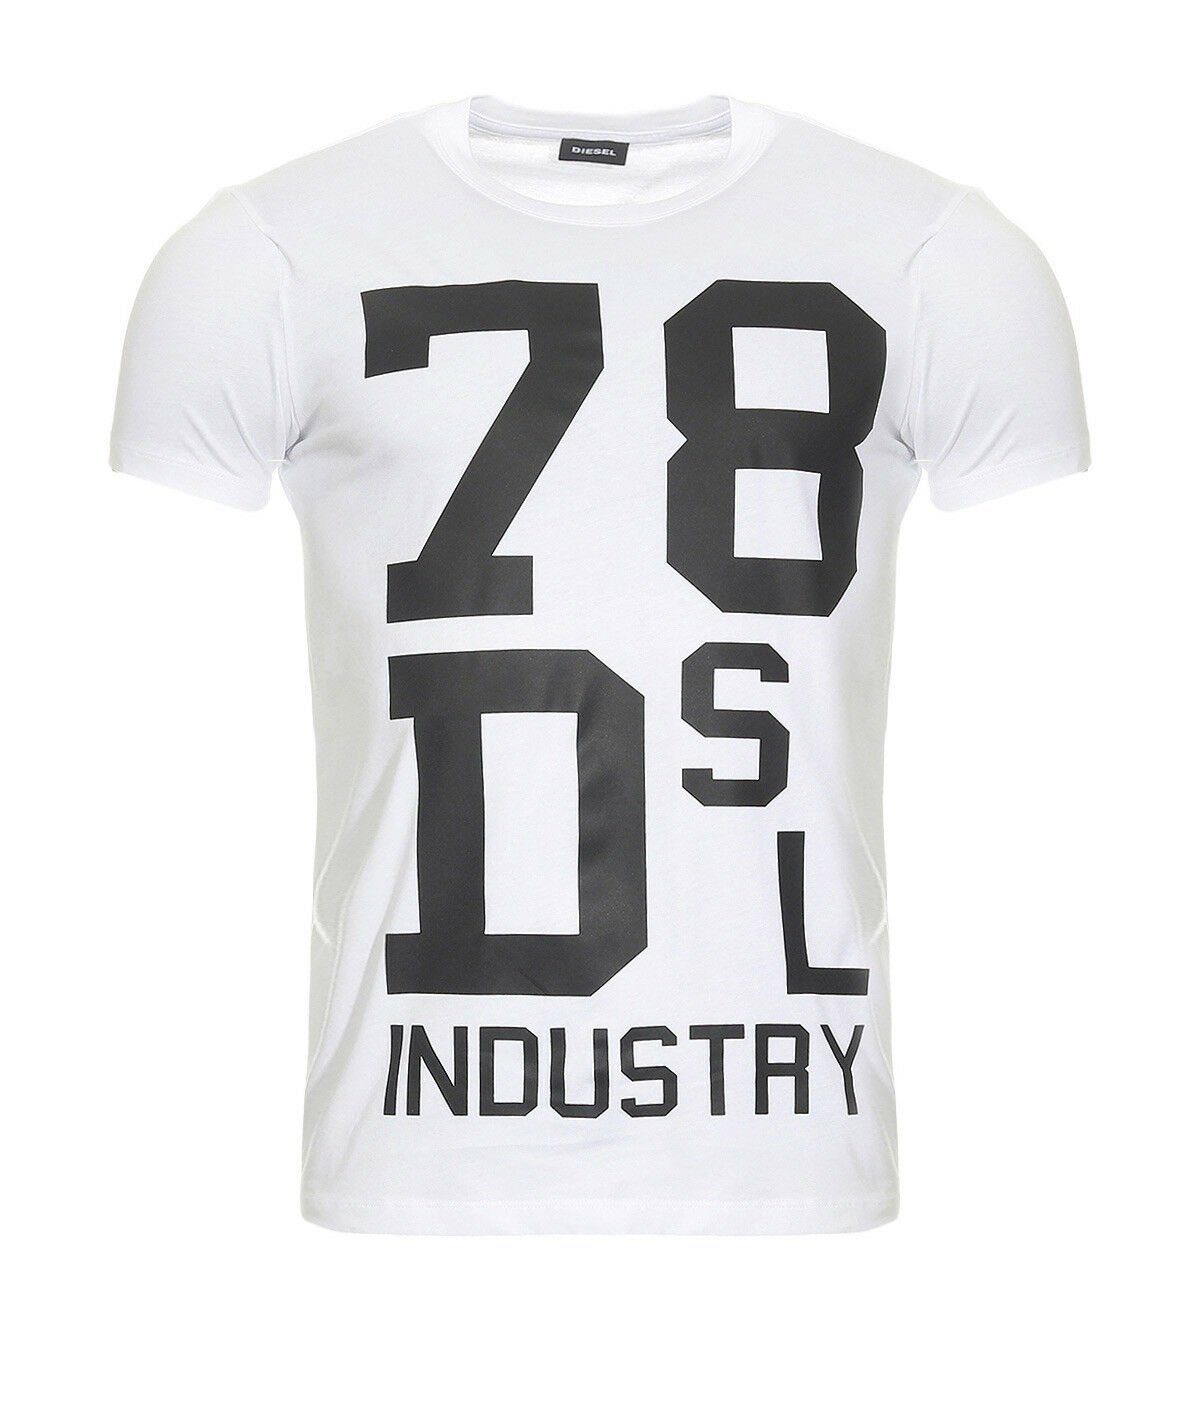 Diesel T-Shirt Diesel Herren T-Shirt Weiss Print-Schriftzug, T-DIEGO-ND Motiv Schnitt, Gerade